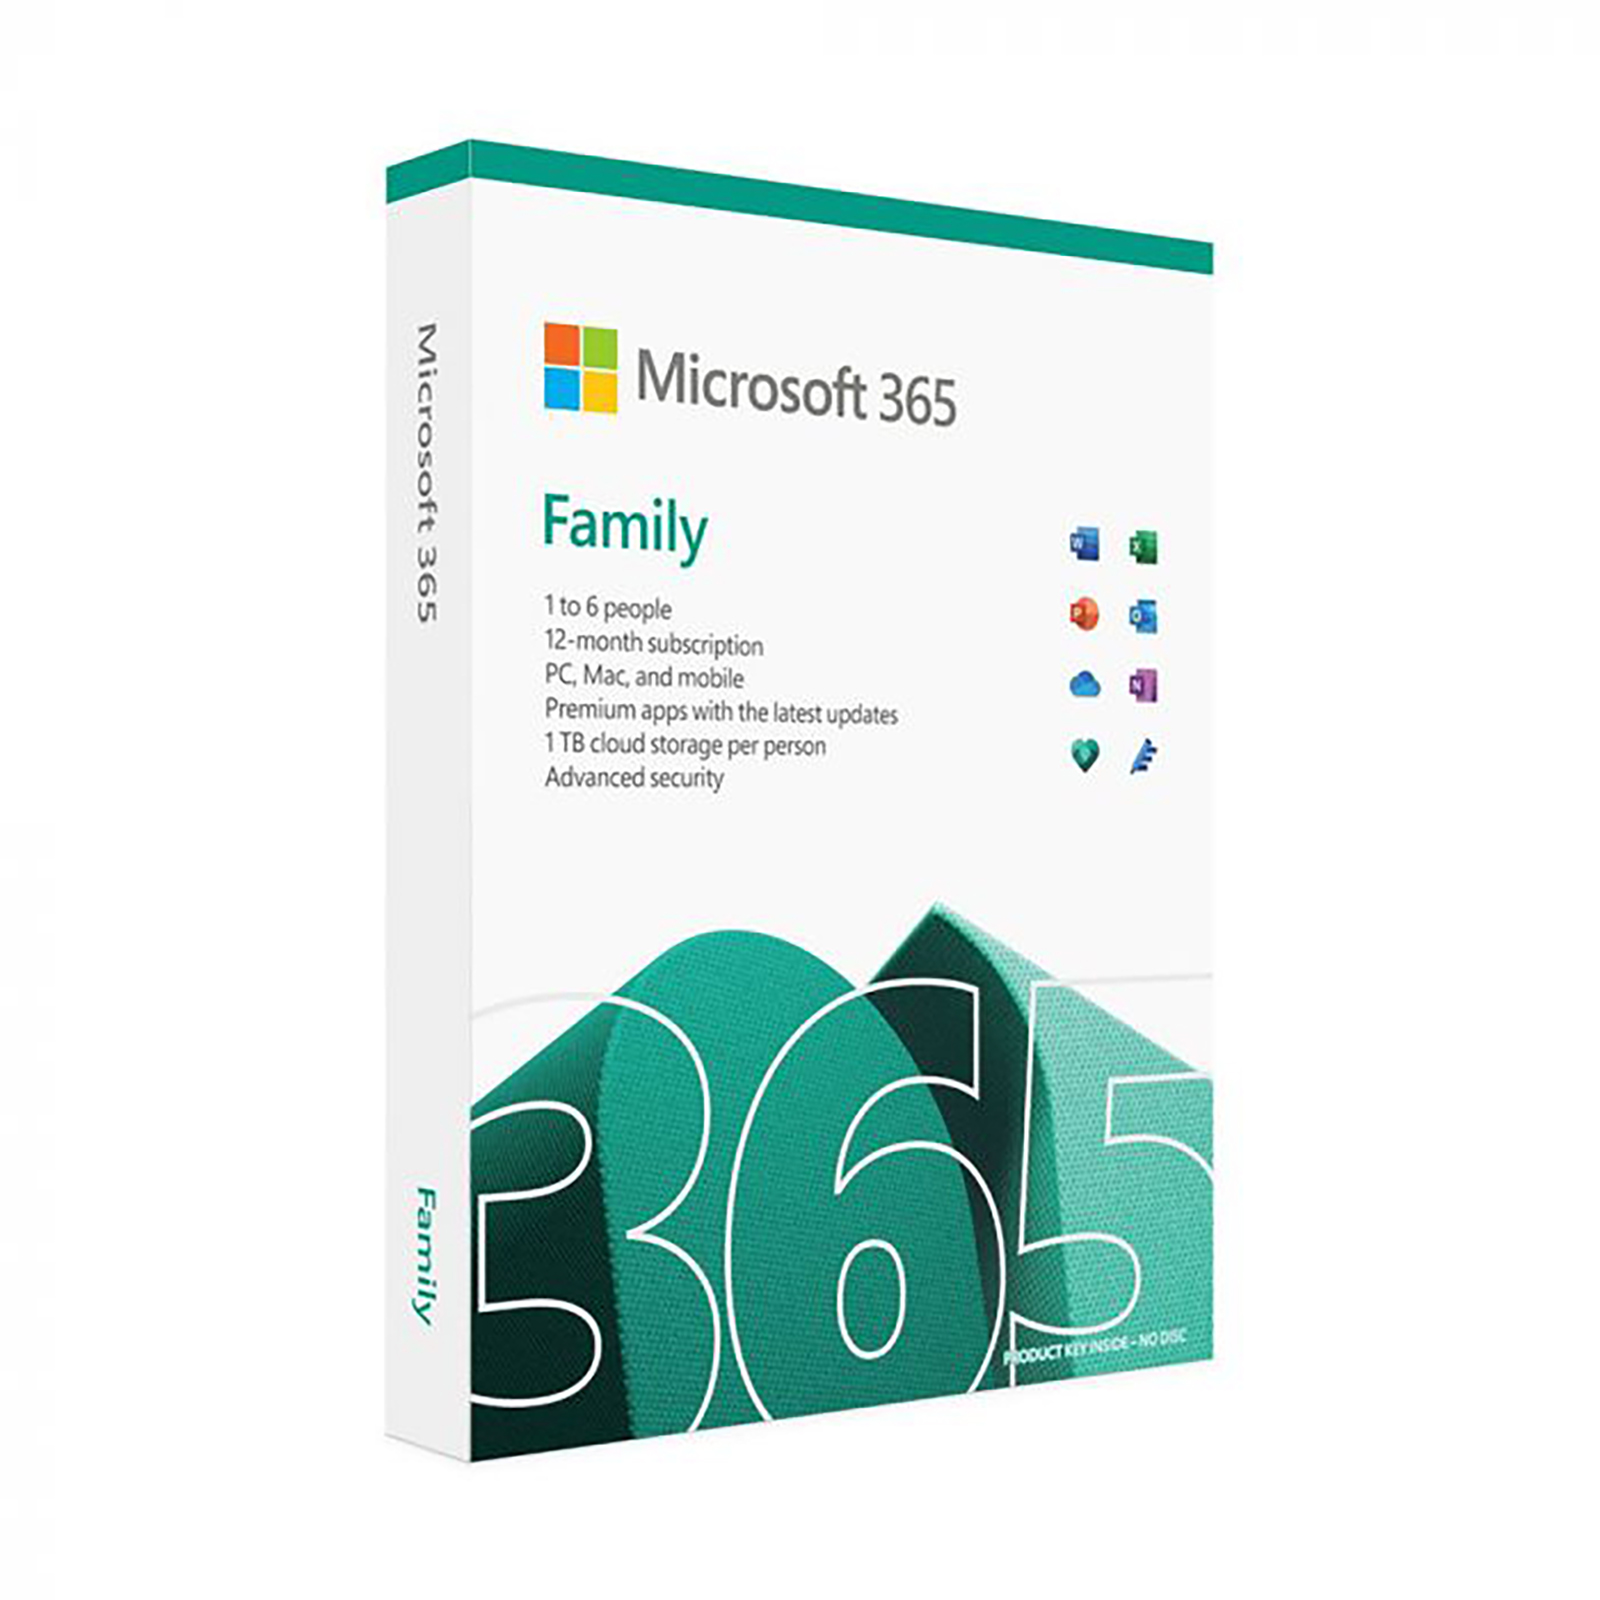 Microsoft 365 Family (1 Year) - 